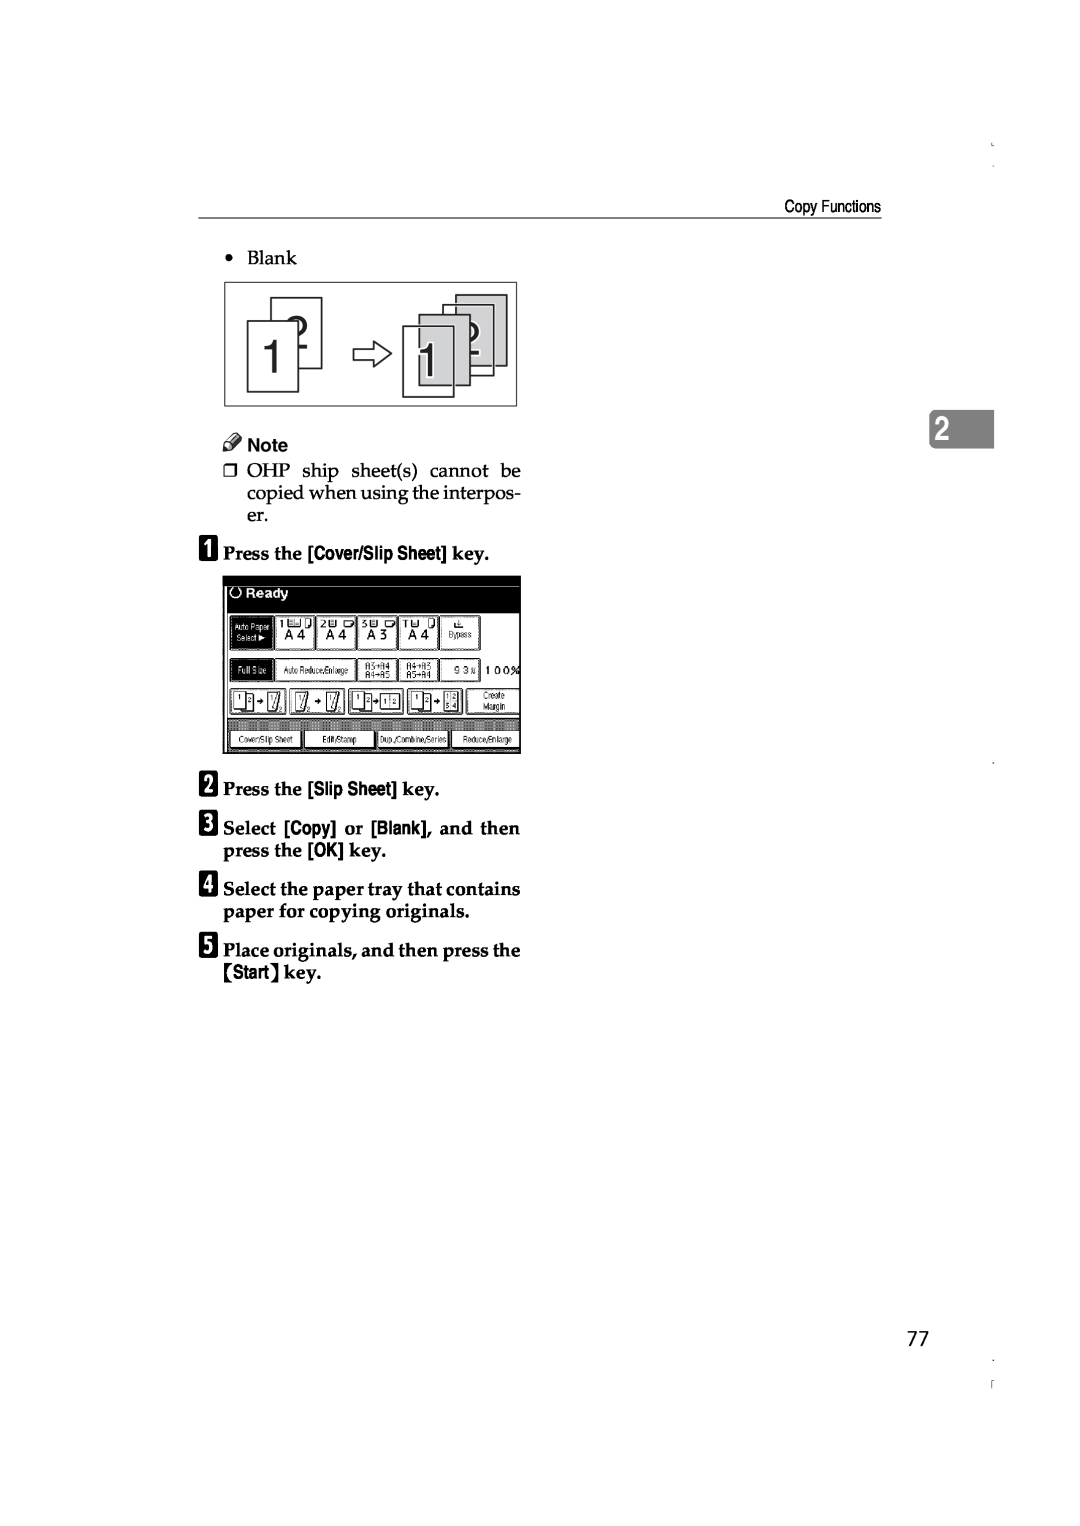 Lanier LD060, LD075 manual B Press the Slip Sheet key, C Select Copy or Blank, and then press the OK key, Start key 